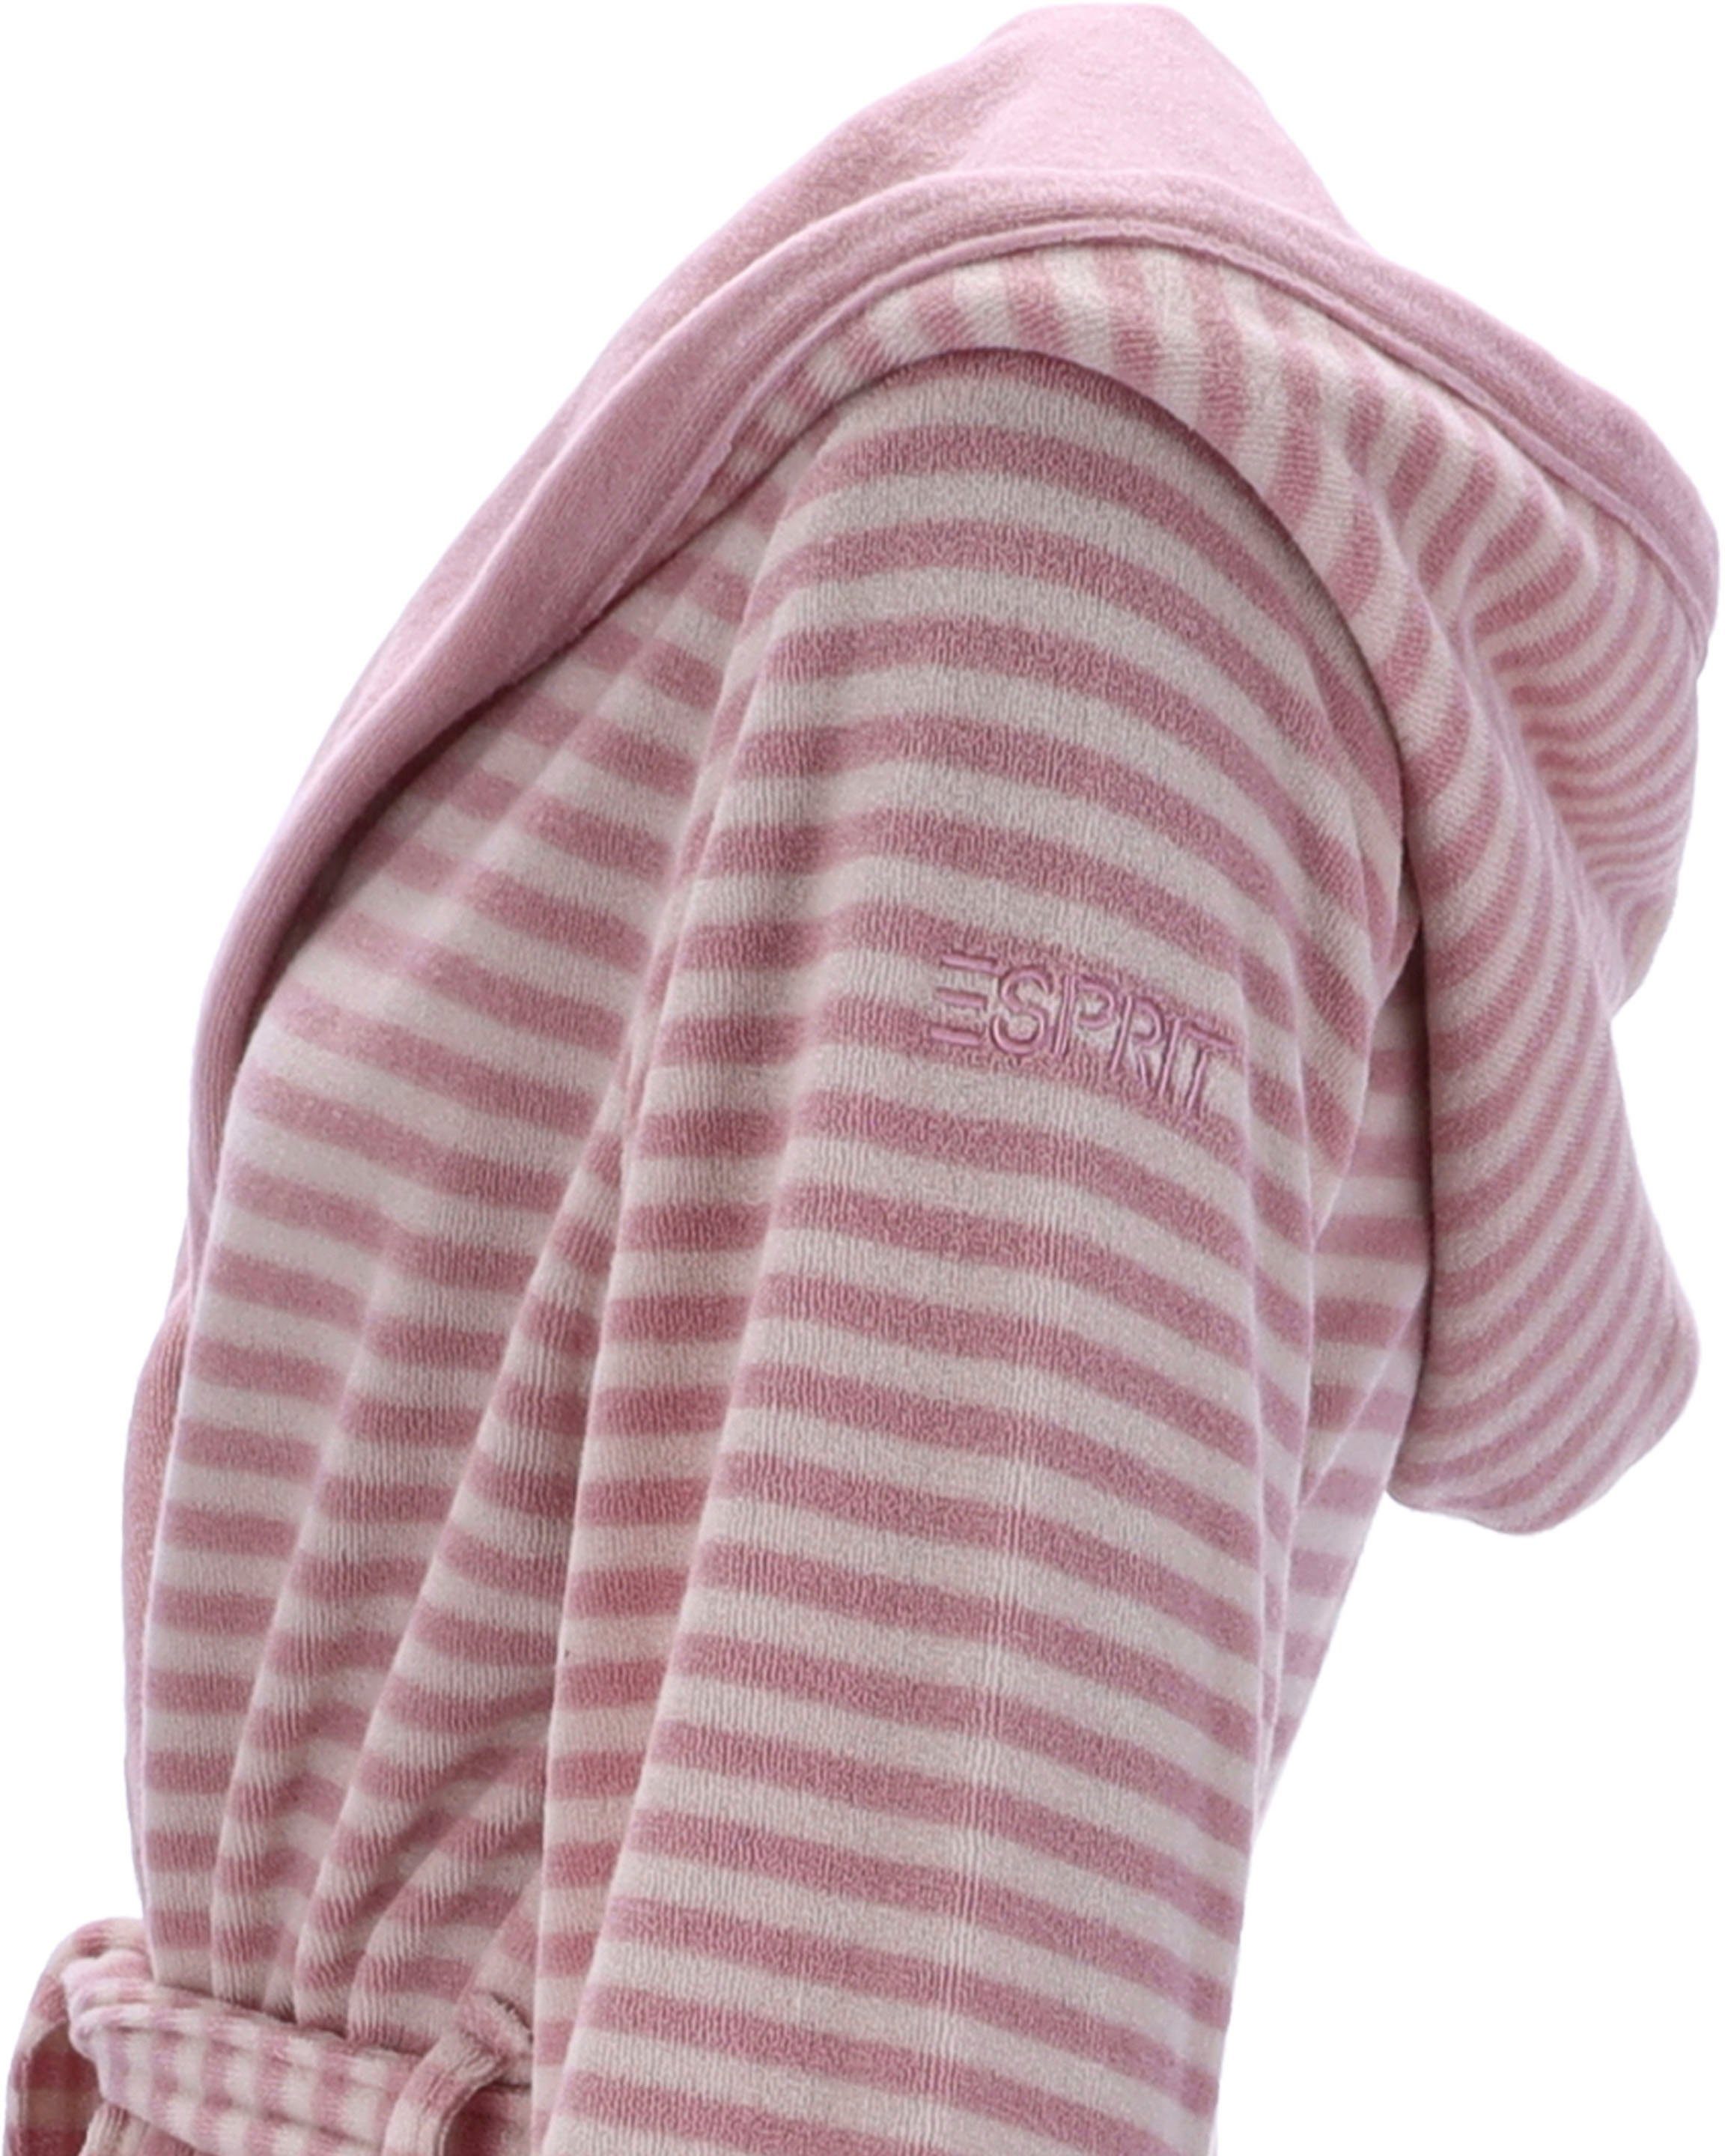 Esprit Gürtel, Damenbademantel rose kurz Logostickerei, Kapuze, gestreift, Kurzform, Jersey, mit Kaputze & Hoody, Striped